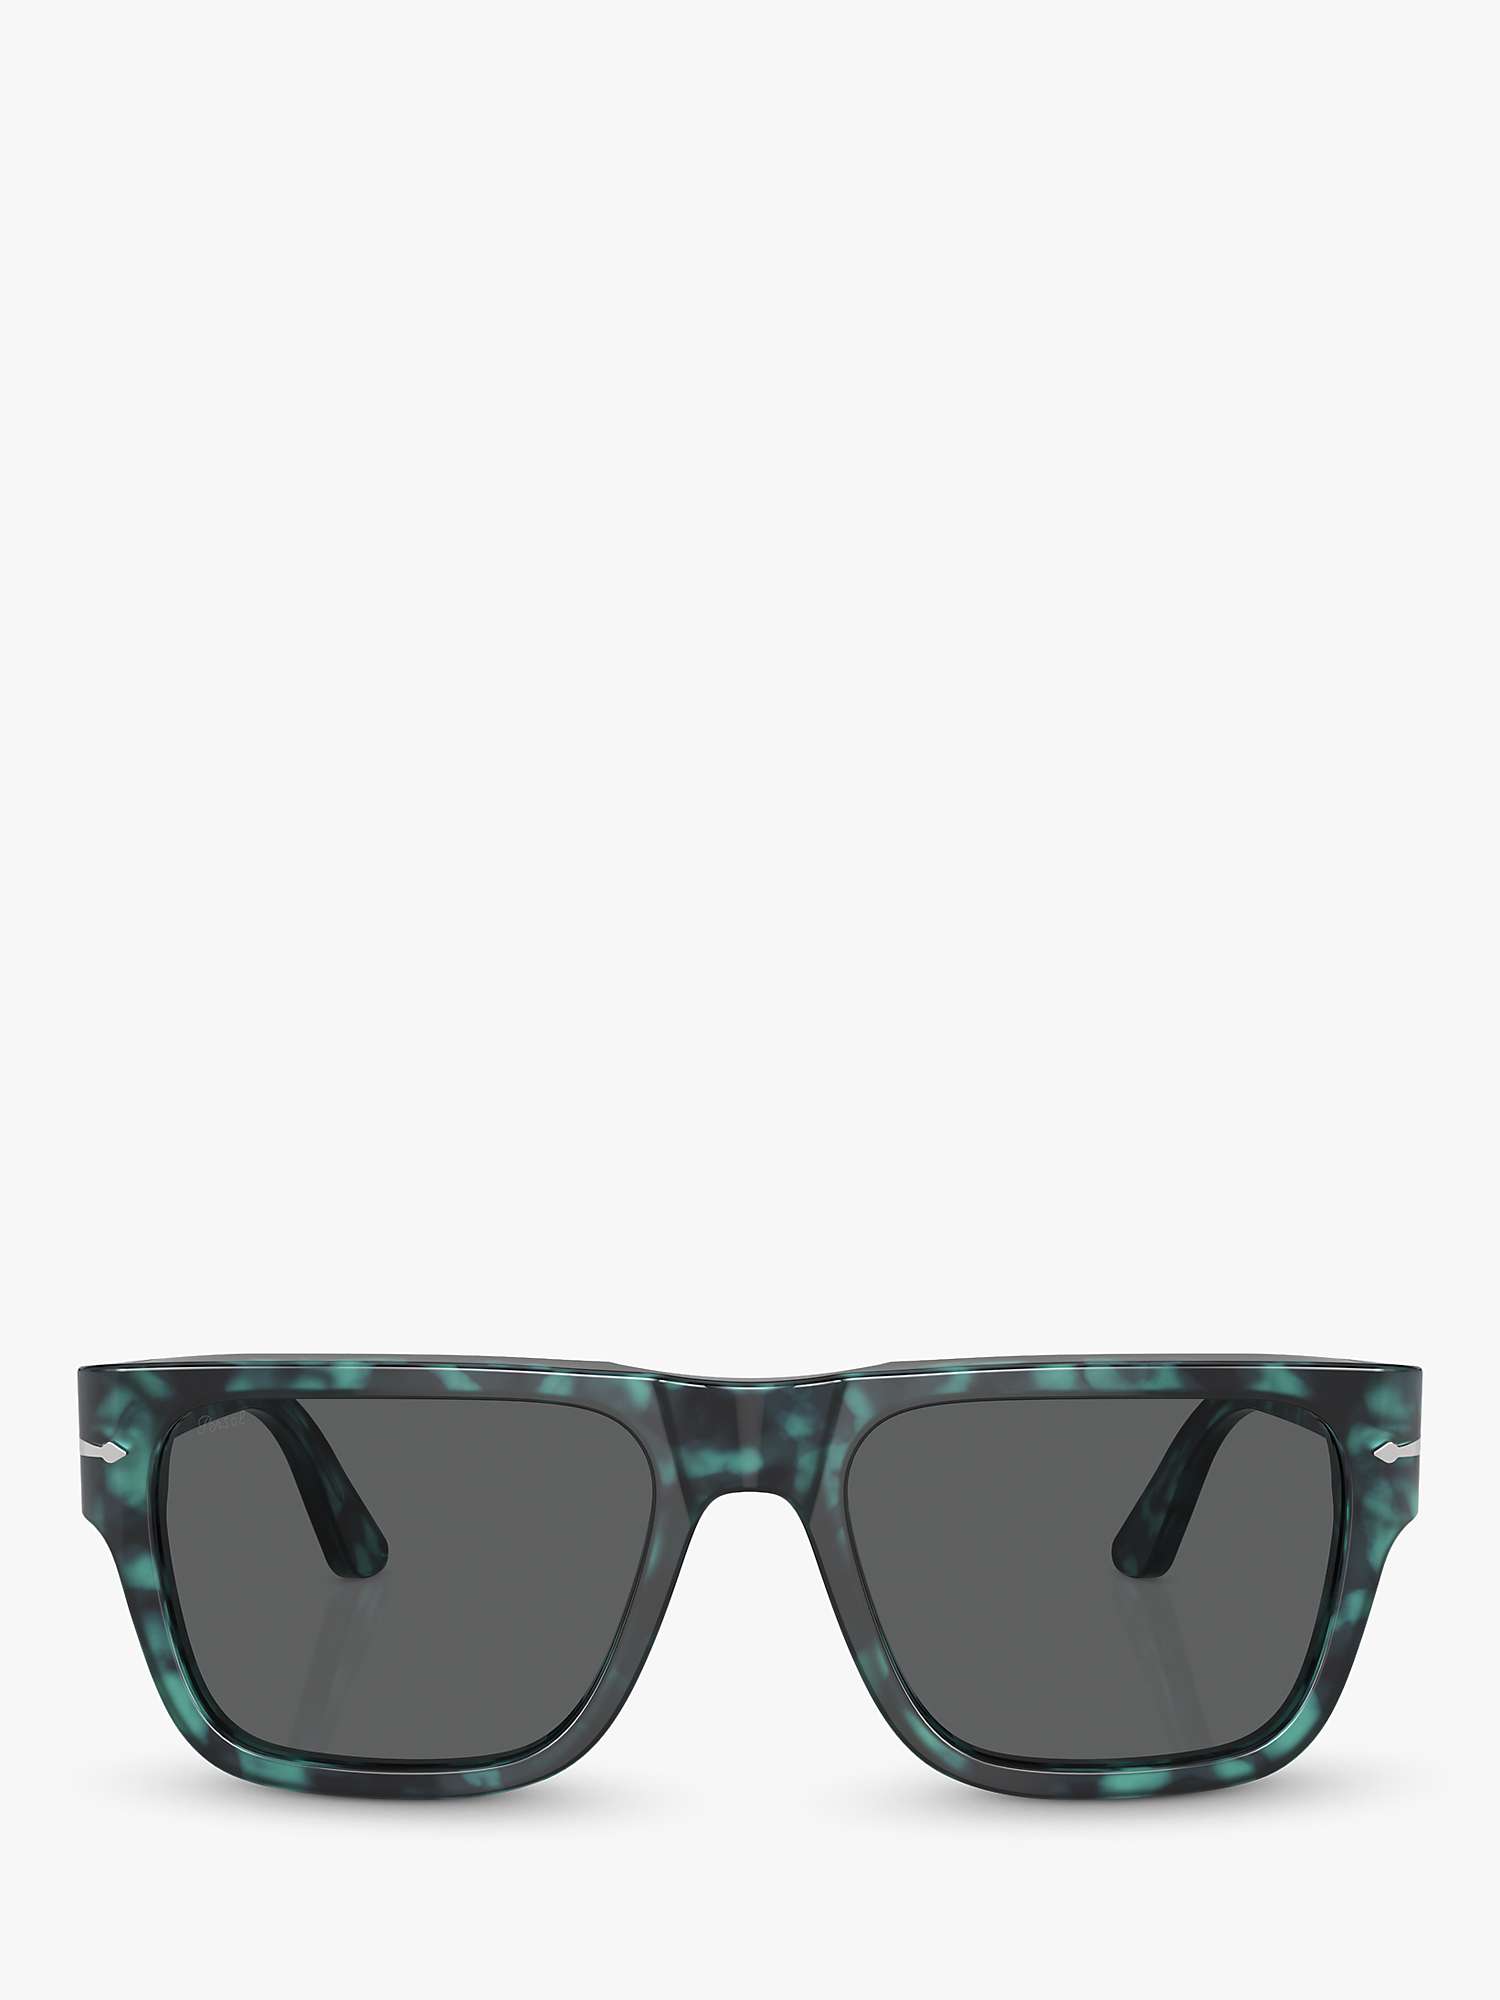 Buy Persol PO3348S Men's D-Frame Sunglasses, Blue Havana/Grey Online at johnlewis.com